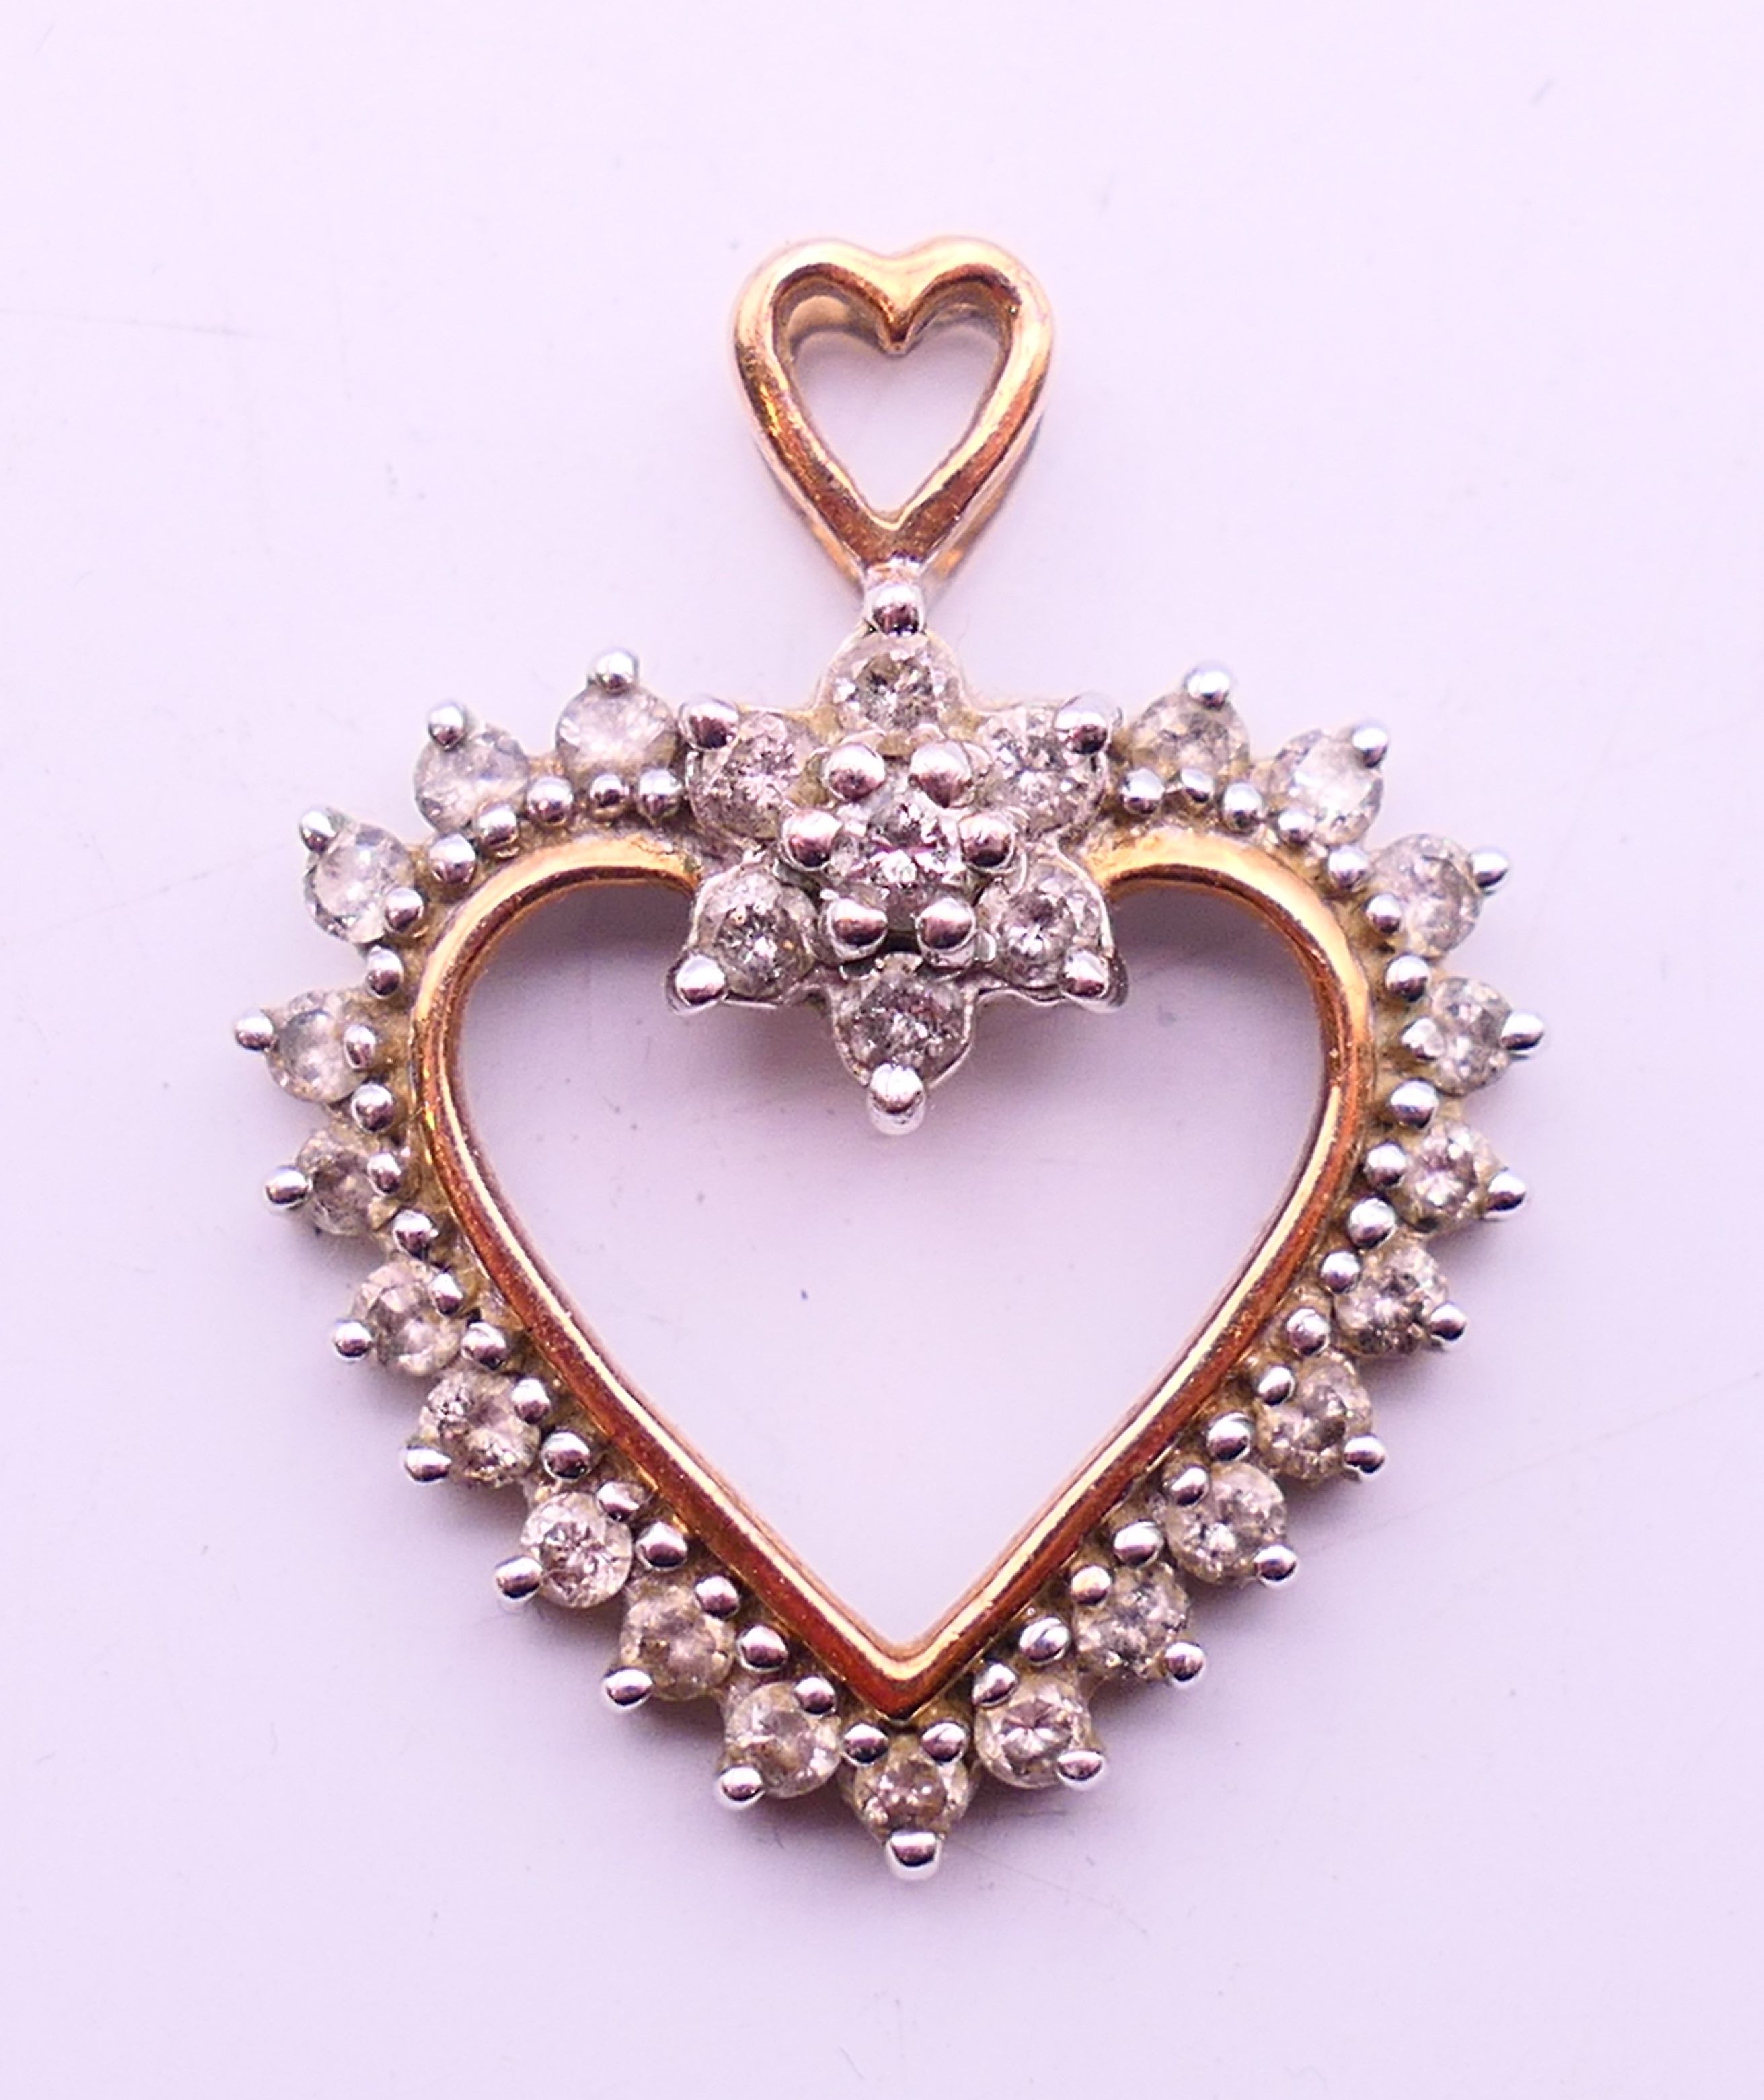 A 9 ct gold heart pendant. 3 cm high.